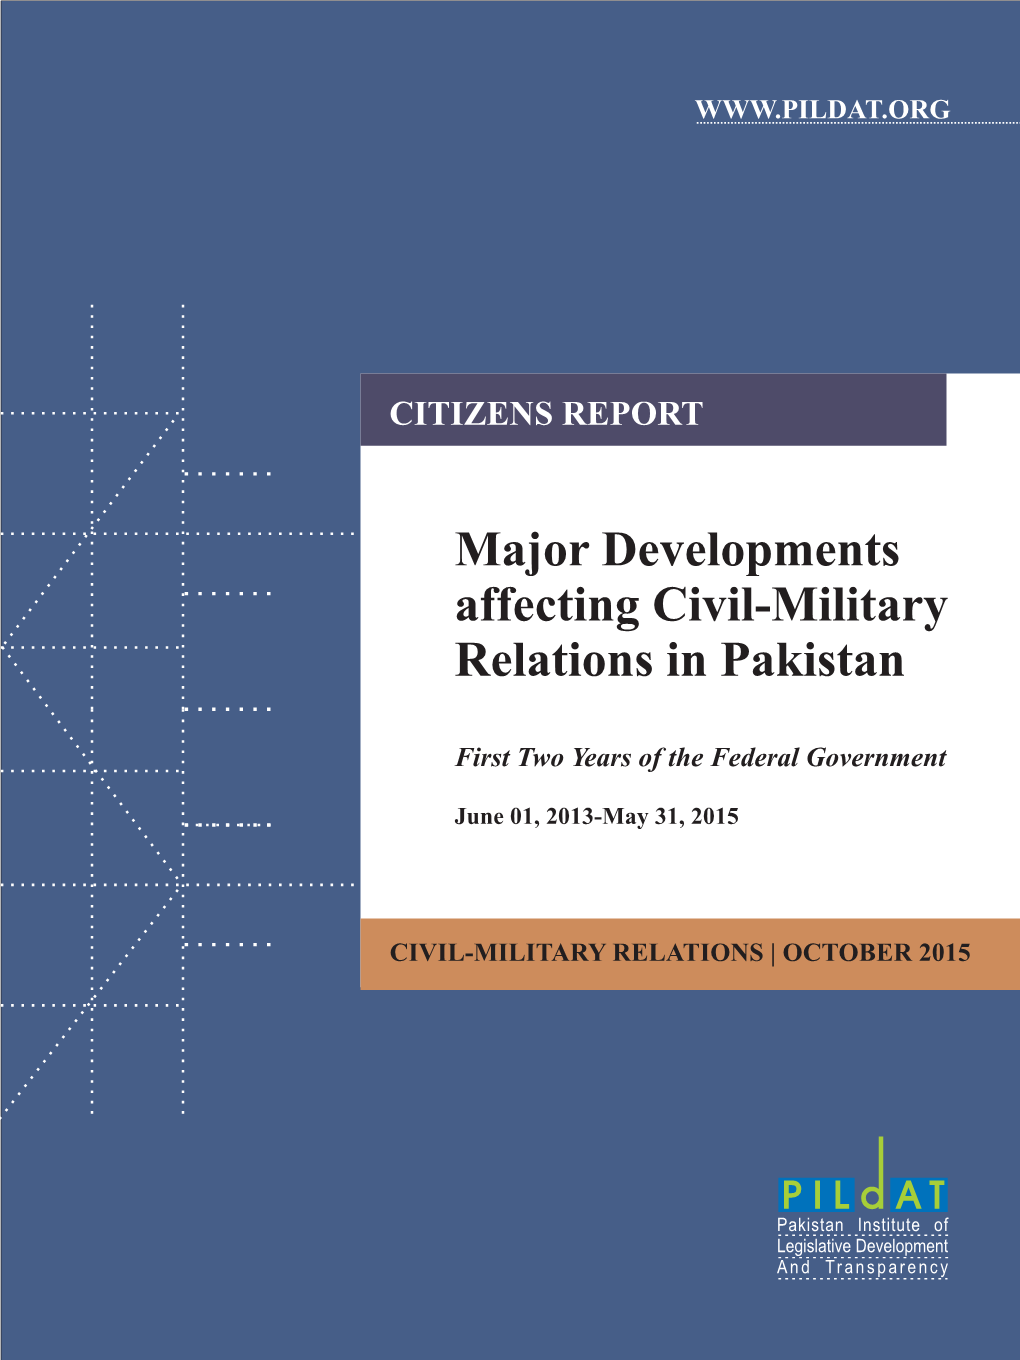 Major Developments Affecting Civil-Military Relations in Pakistan